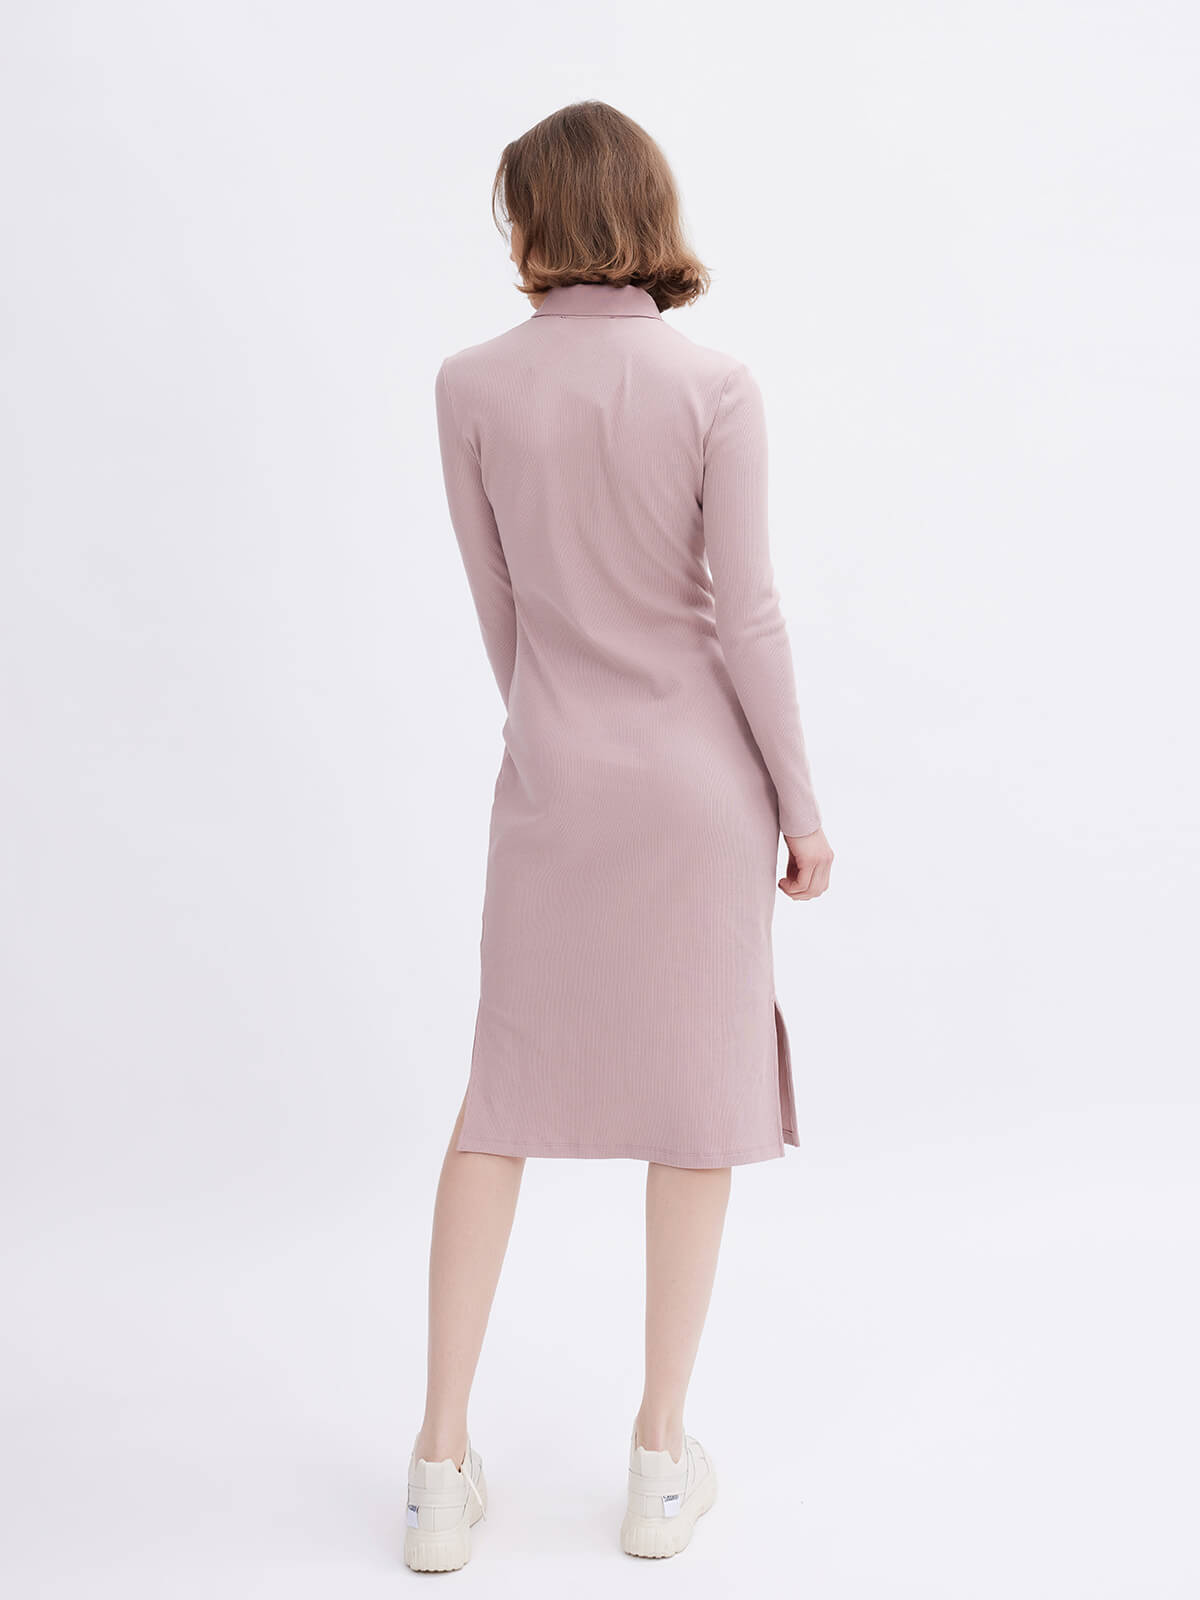 ASOBIO Pink Knit Bodycon Dress